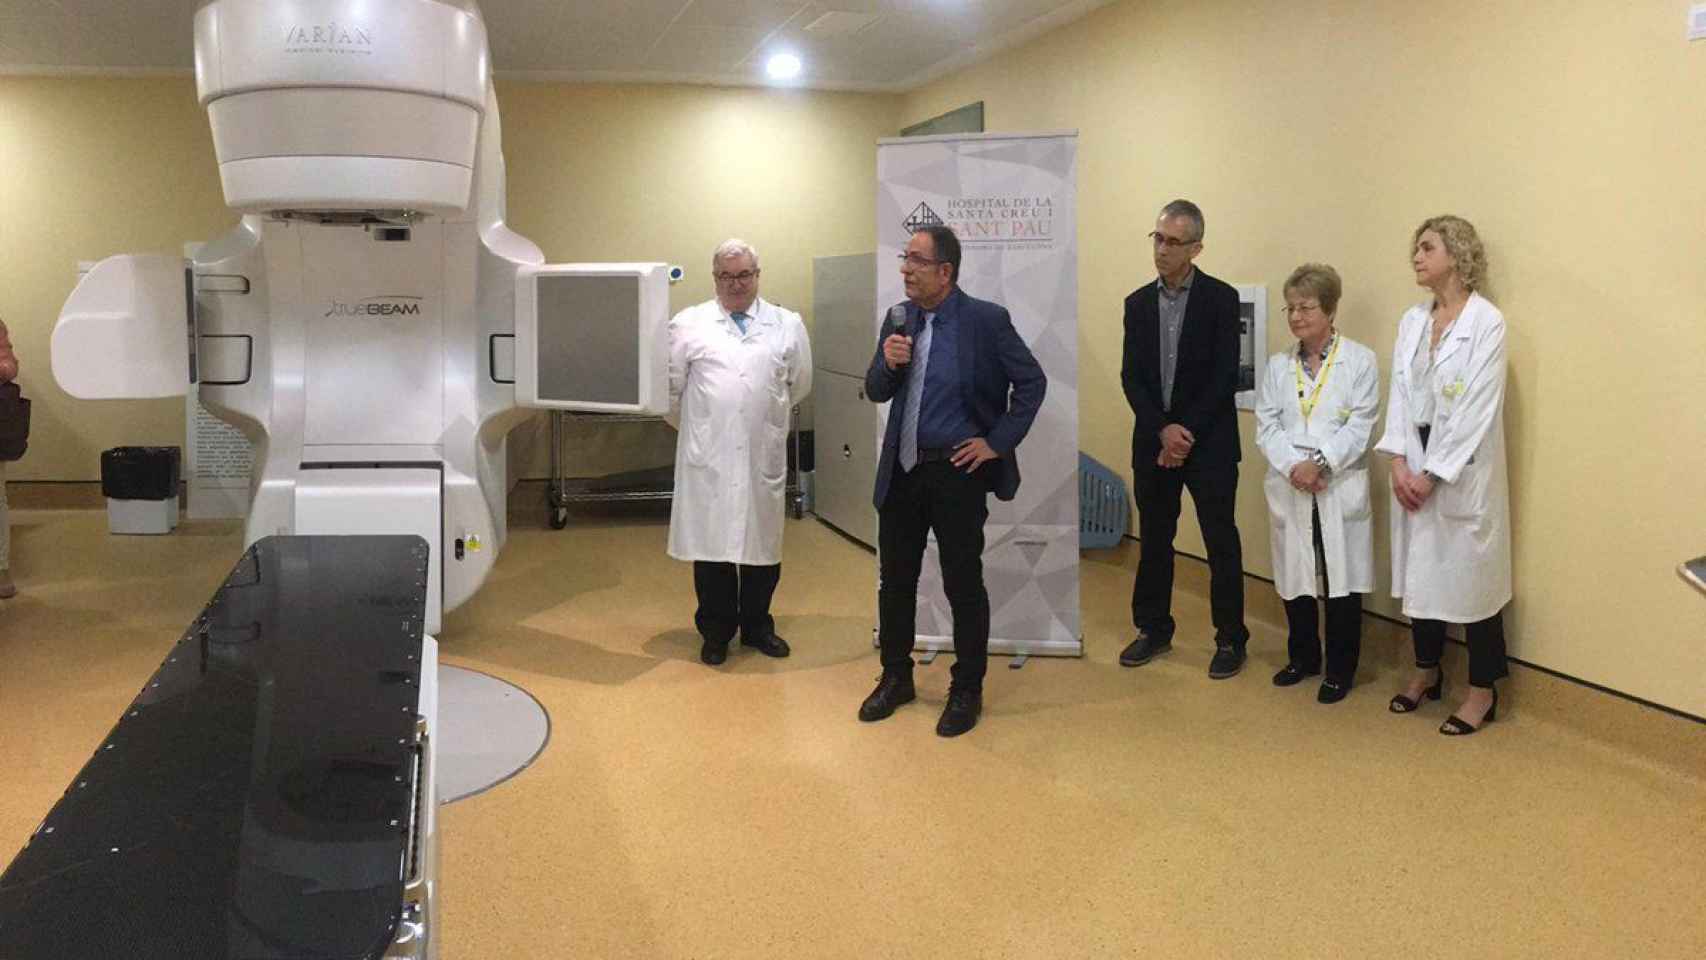 Presentación de la nueva maquina de radioterapia del hospital de Sant Pau / HOSPITAL DE SANT PAU